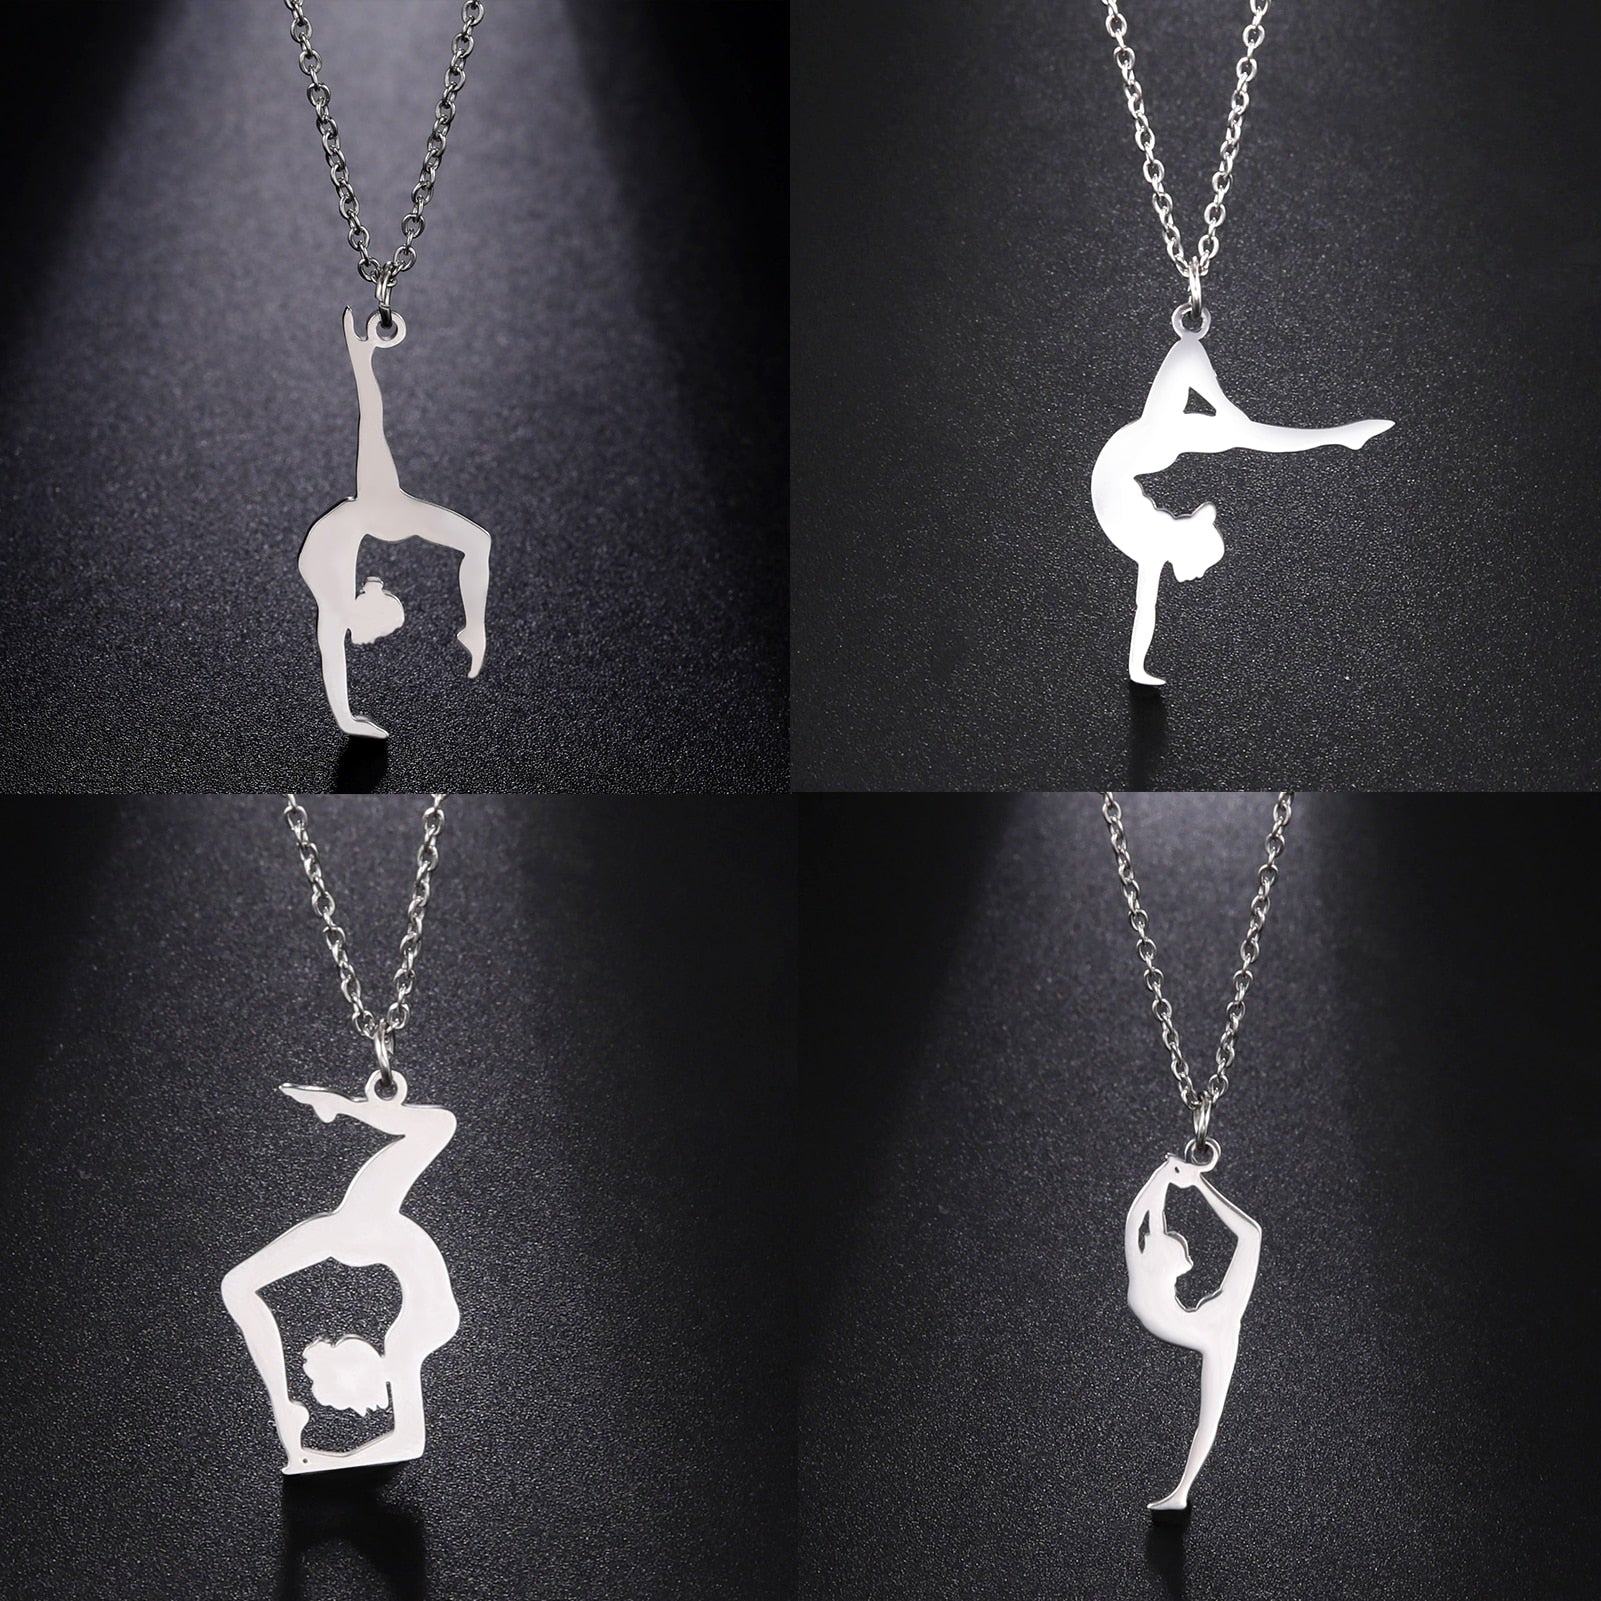 Stainless Steel Dancer Gymnast Gymnastics Necklace for Women Girl Teens